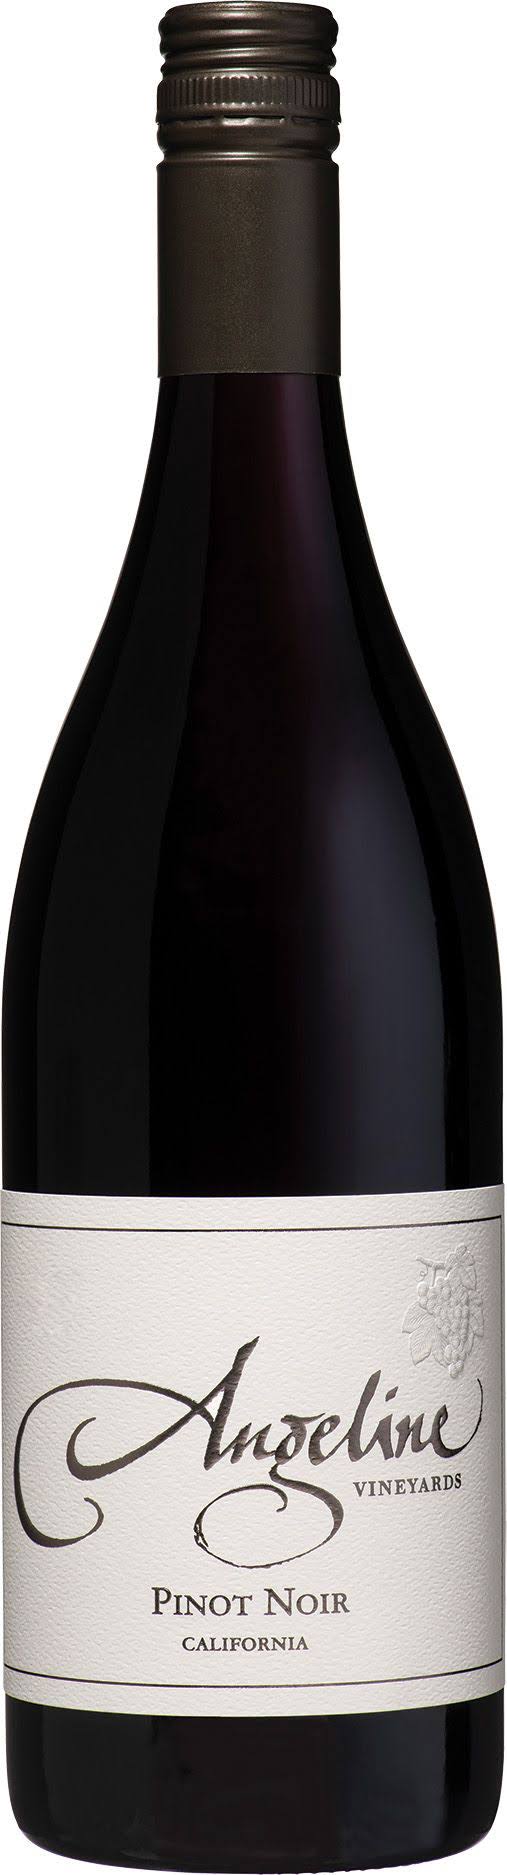 Angeline Pinot Noir, California - 750 ml